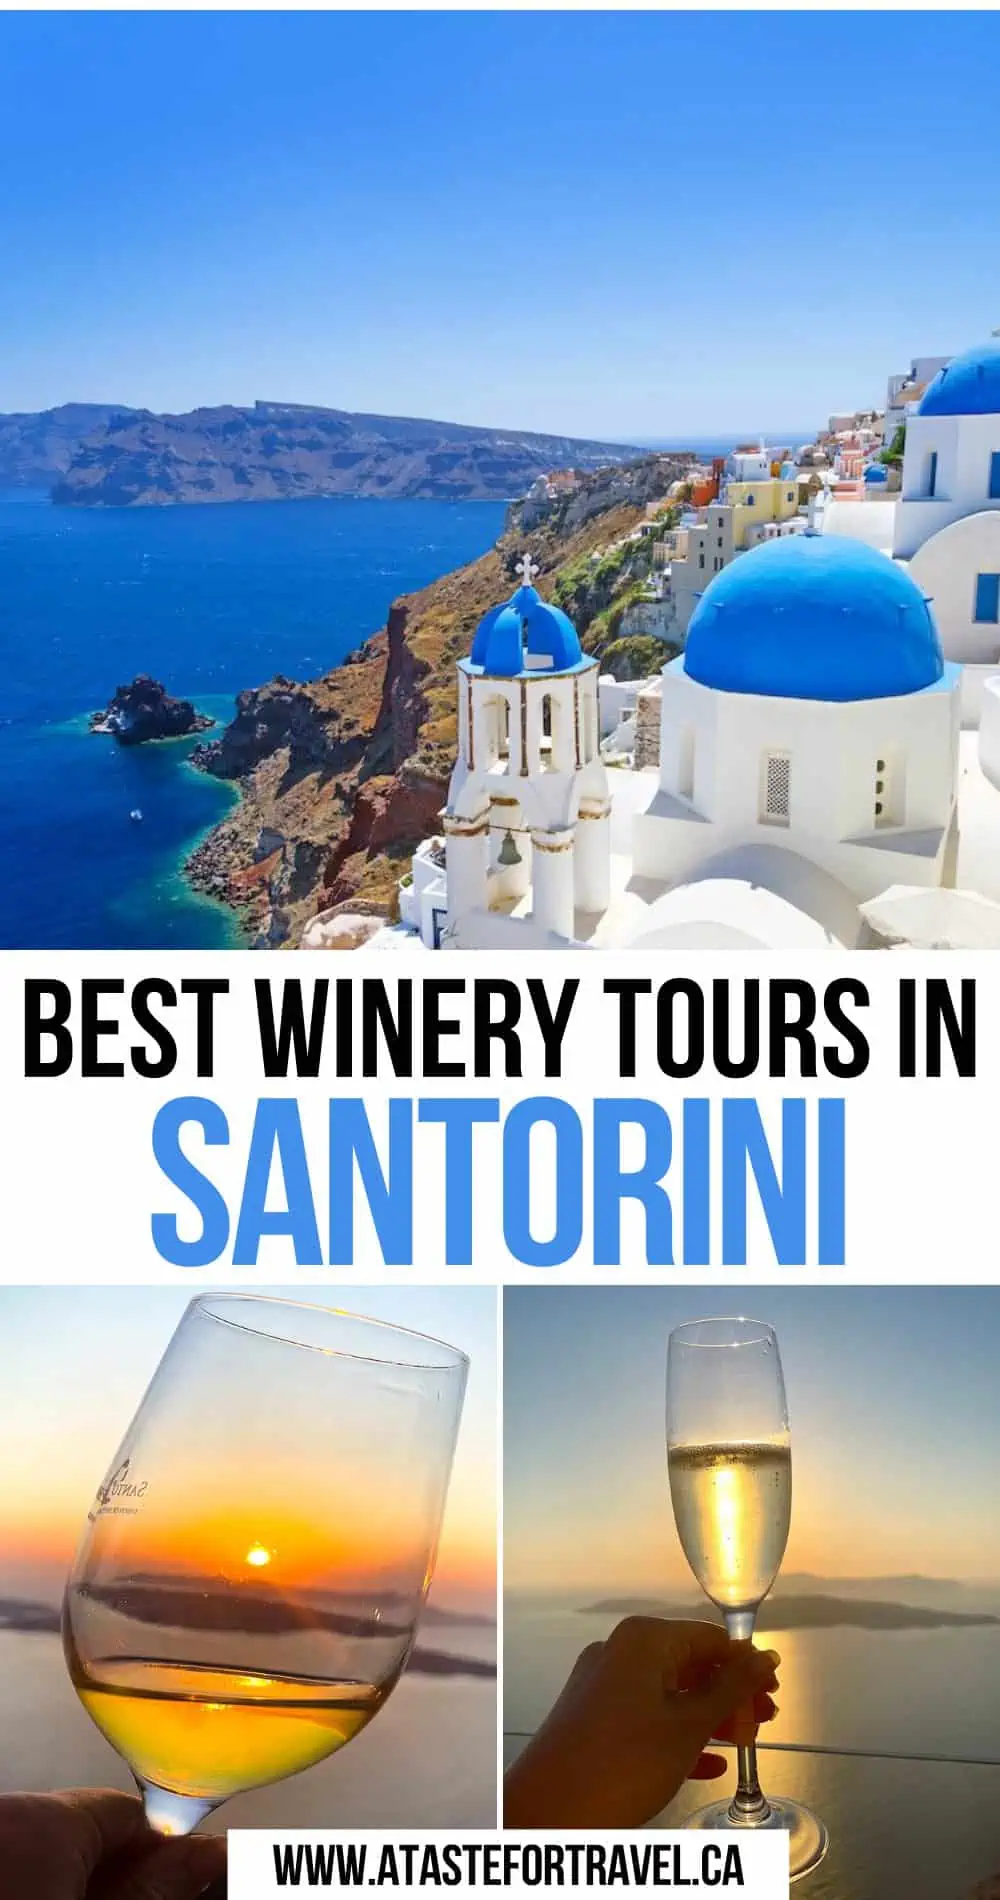 Collage of Santorini scenery and wine.